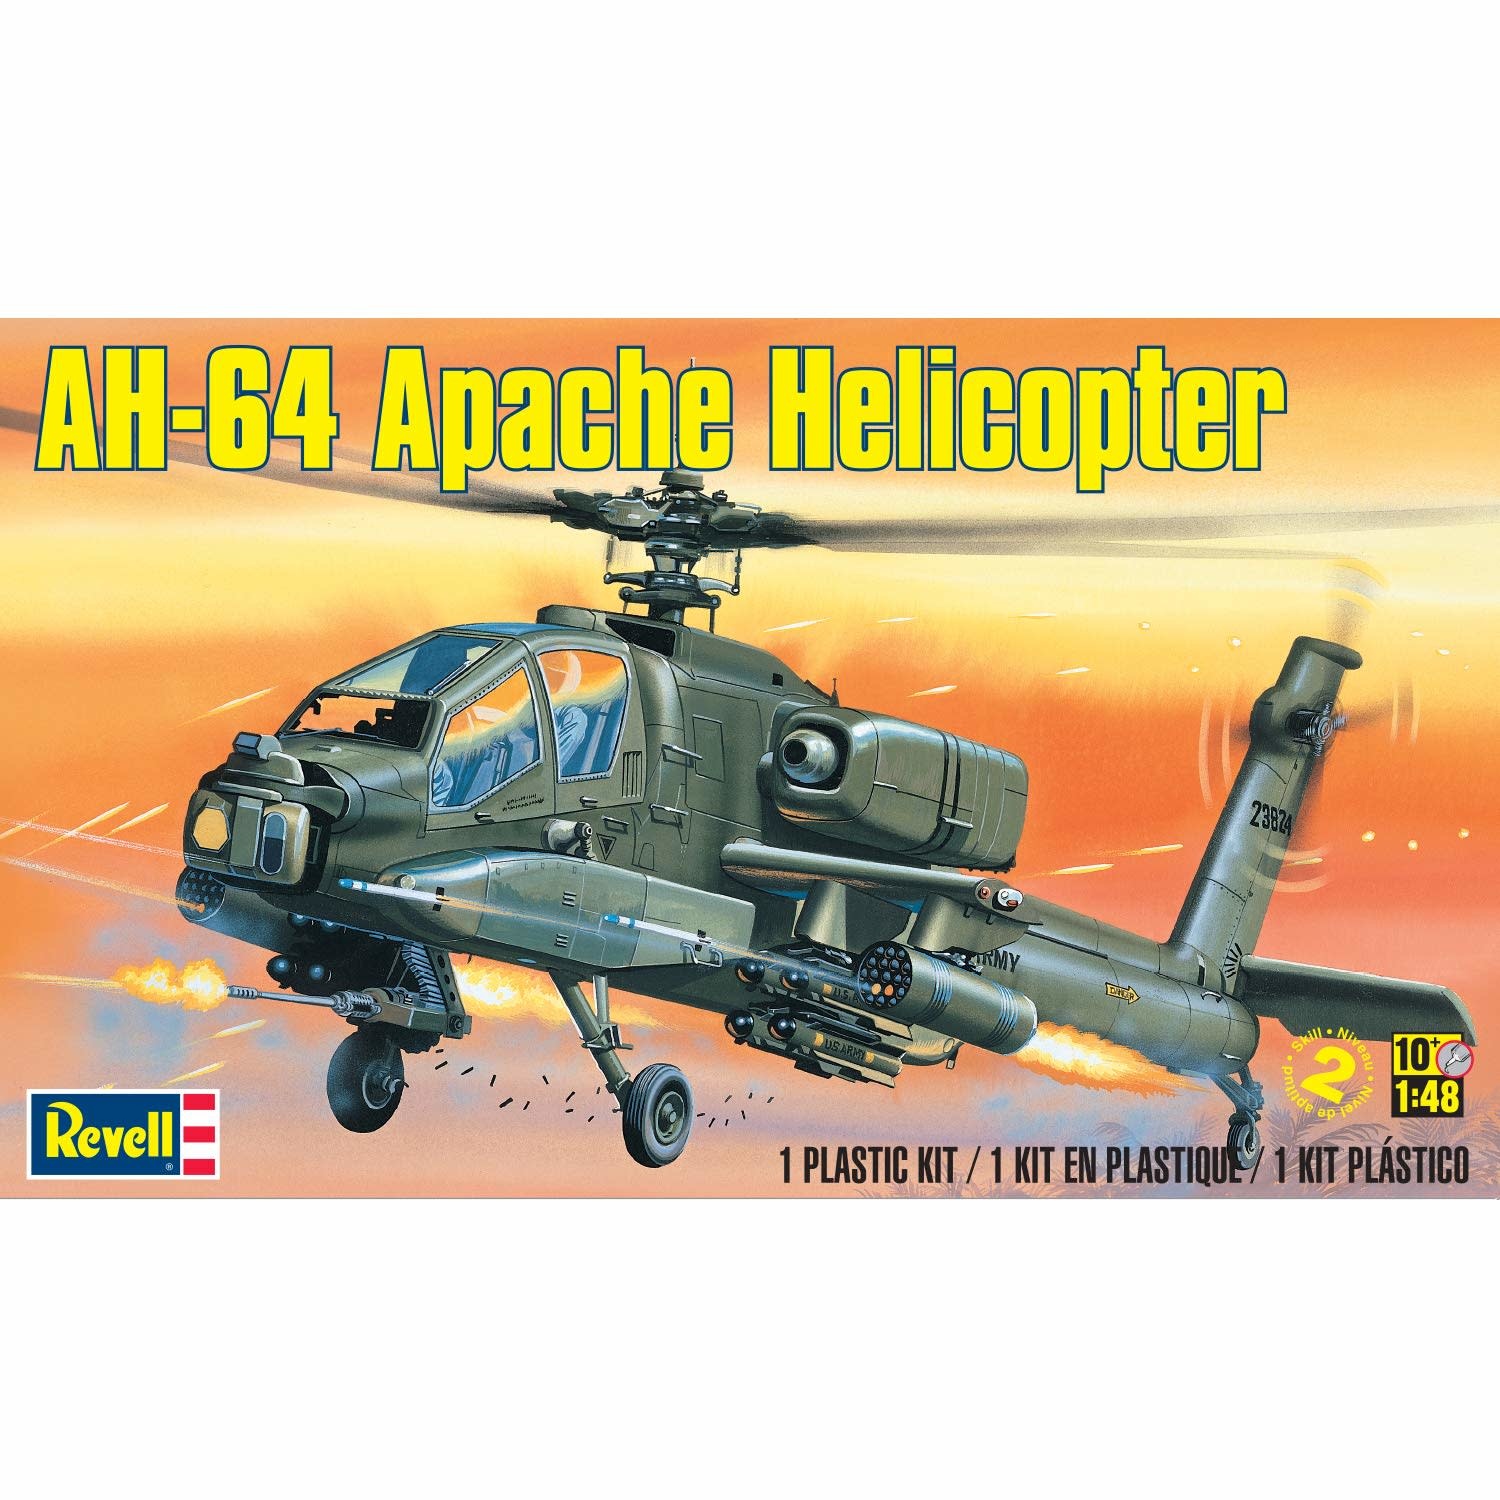 model helicopter kit